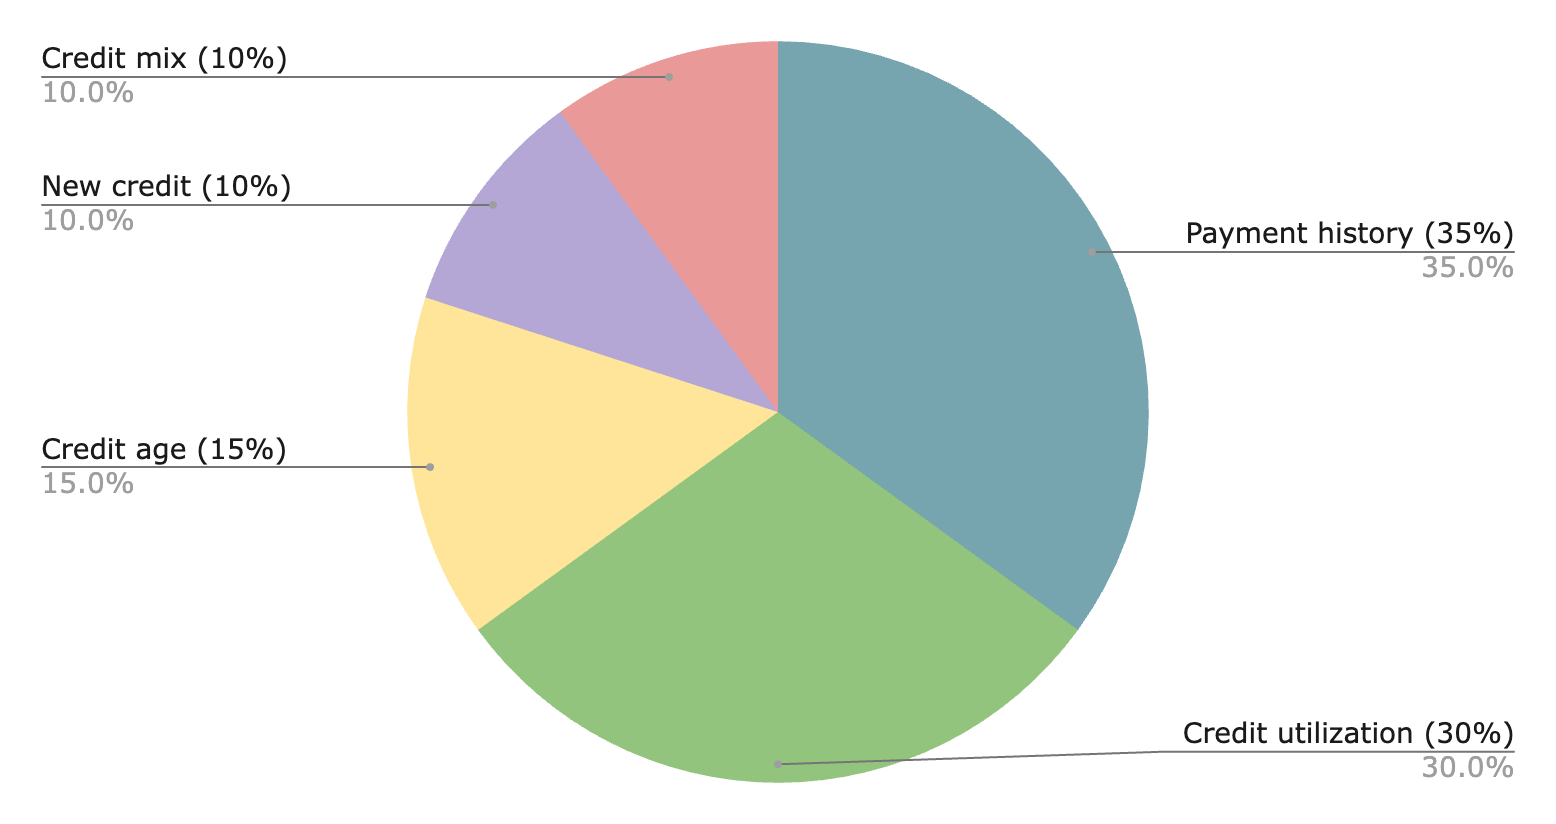 Pie chart showing credit score components